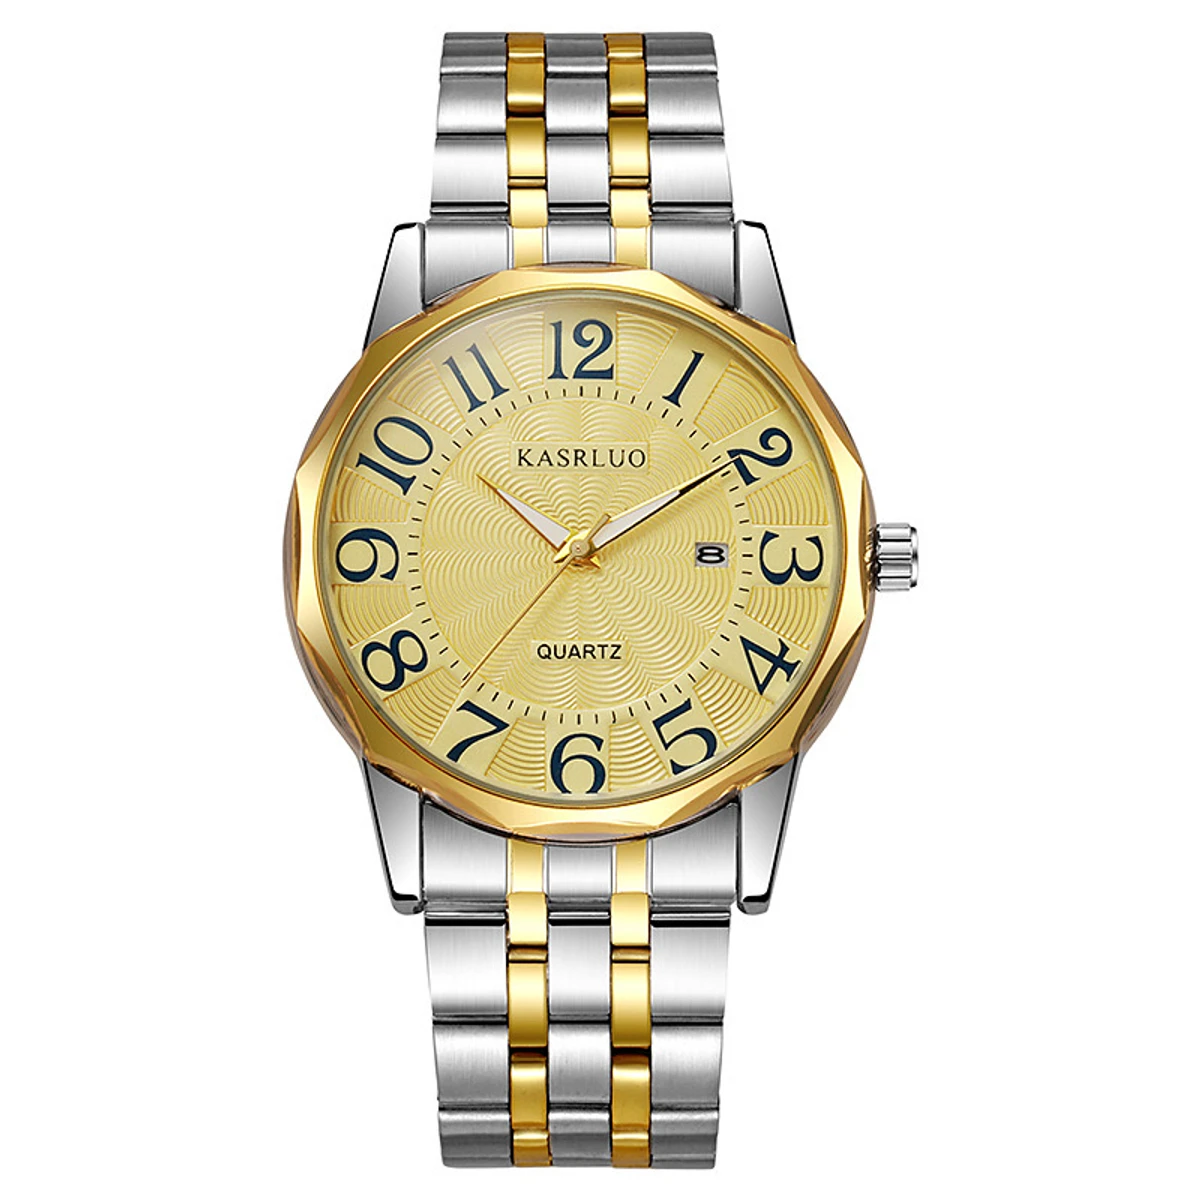 KASRLUO Popular New Fashion Quartz Watch for Men Stainless Steel Waterproof Luminous Date Mens Watches Top Brand Luxury Clock- Golden & Silver